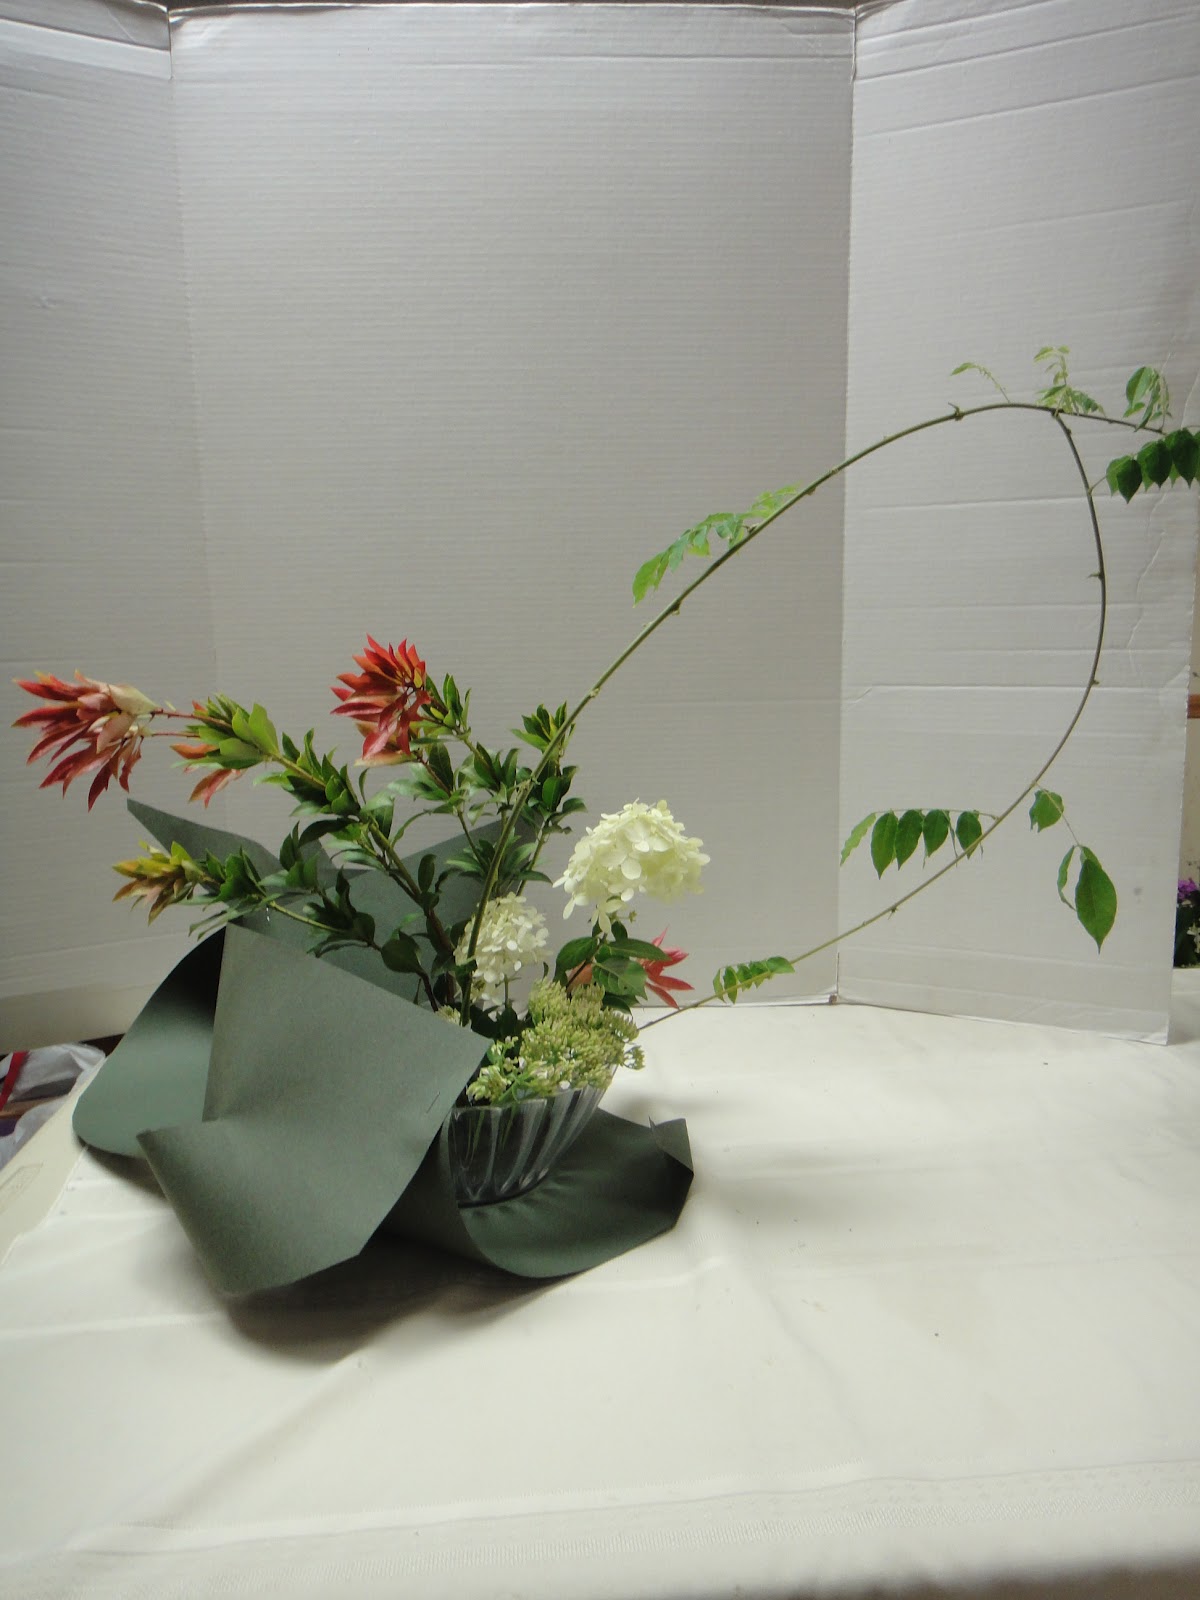 jim-fineman-ikebana-vases